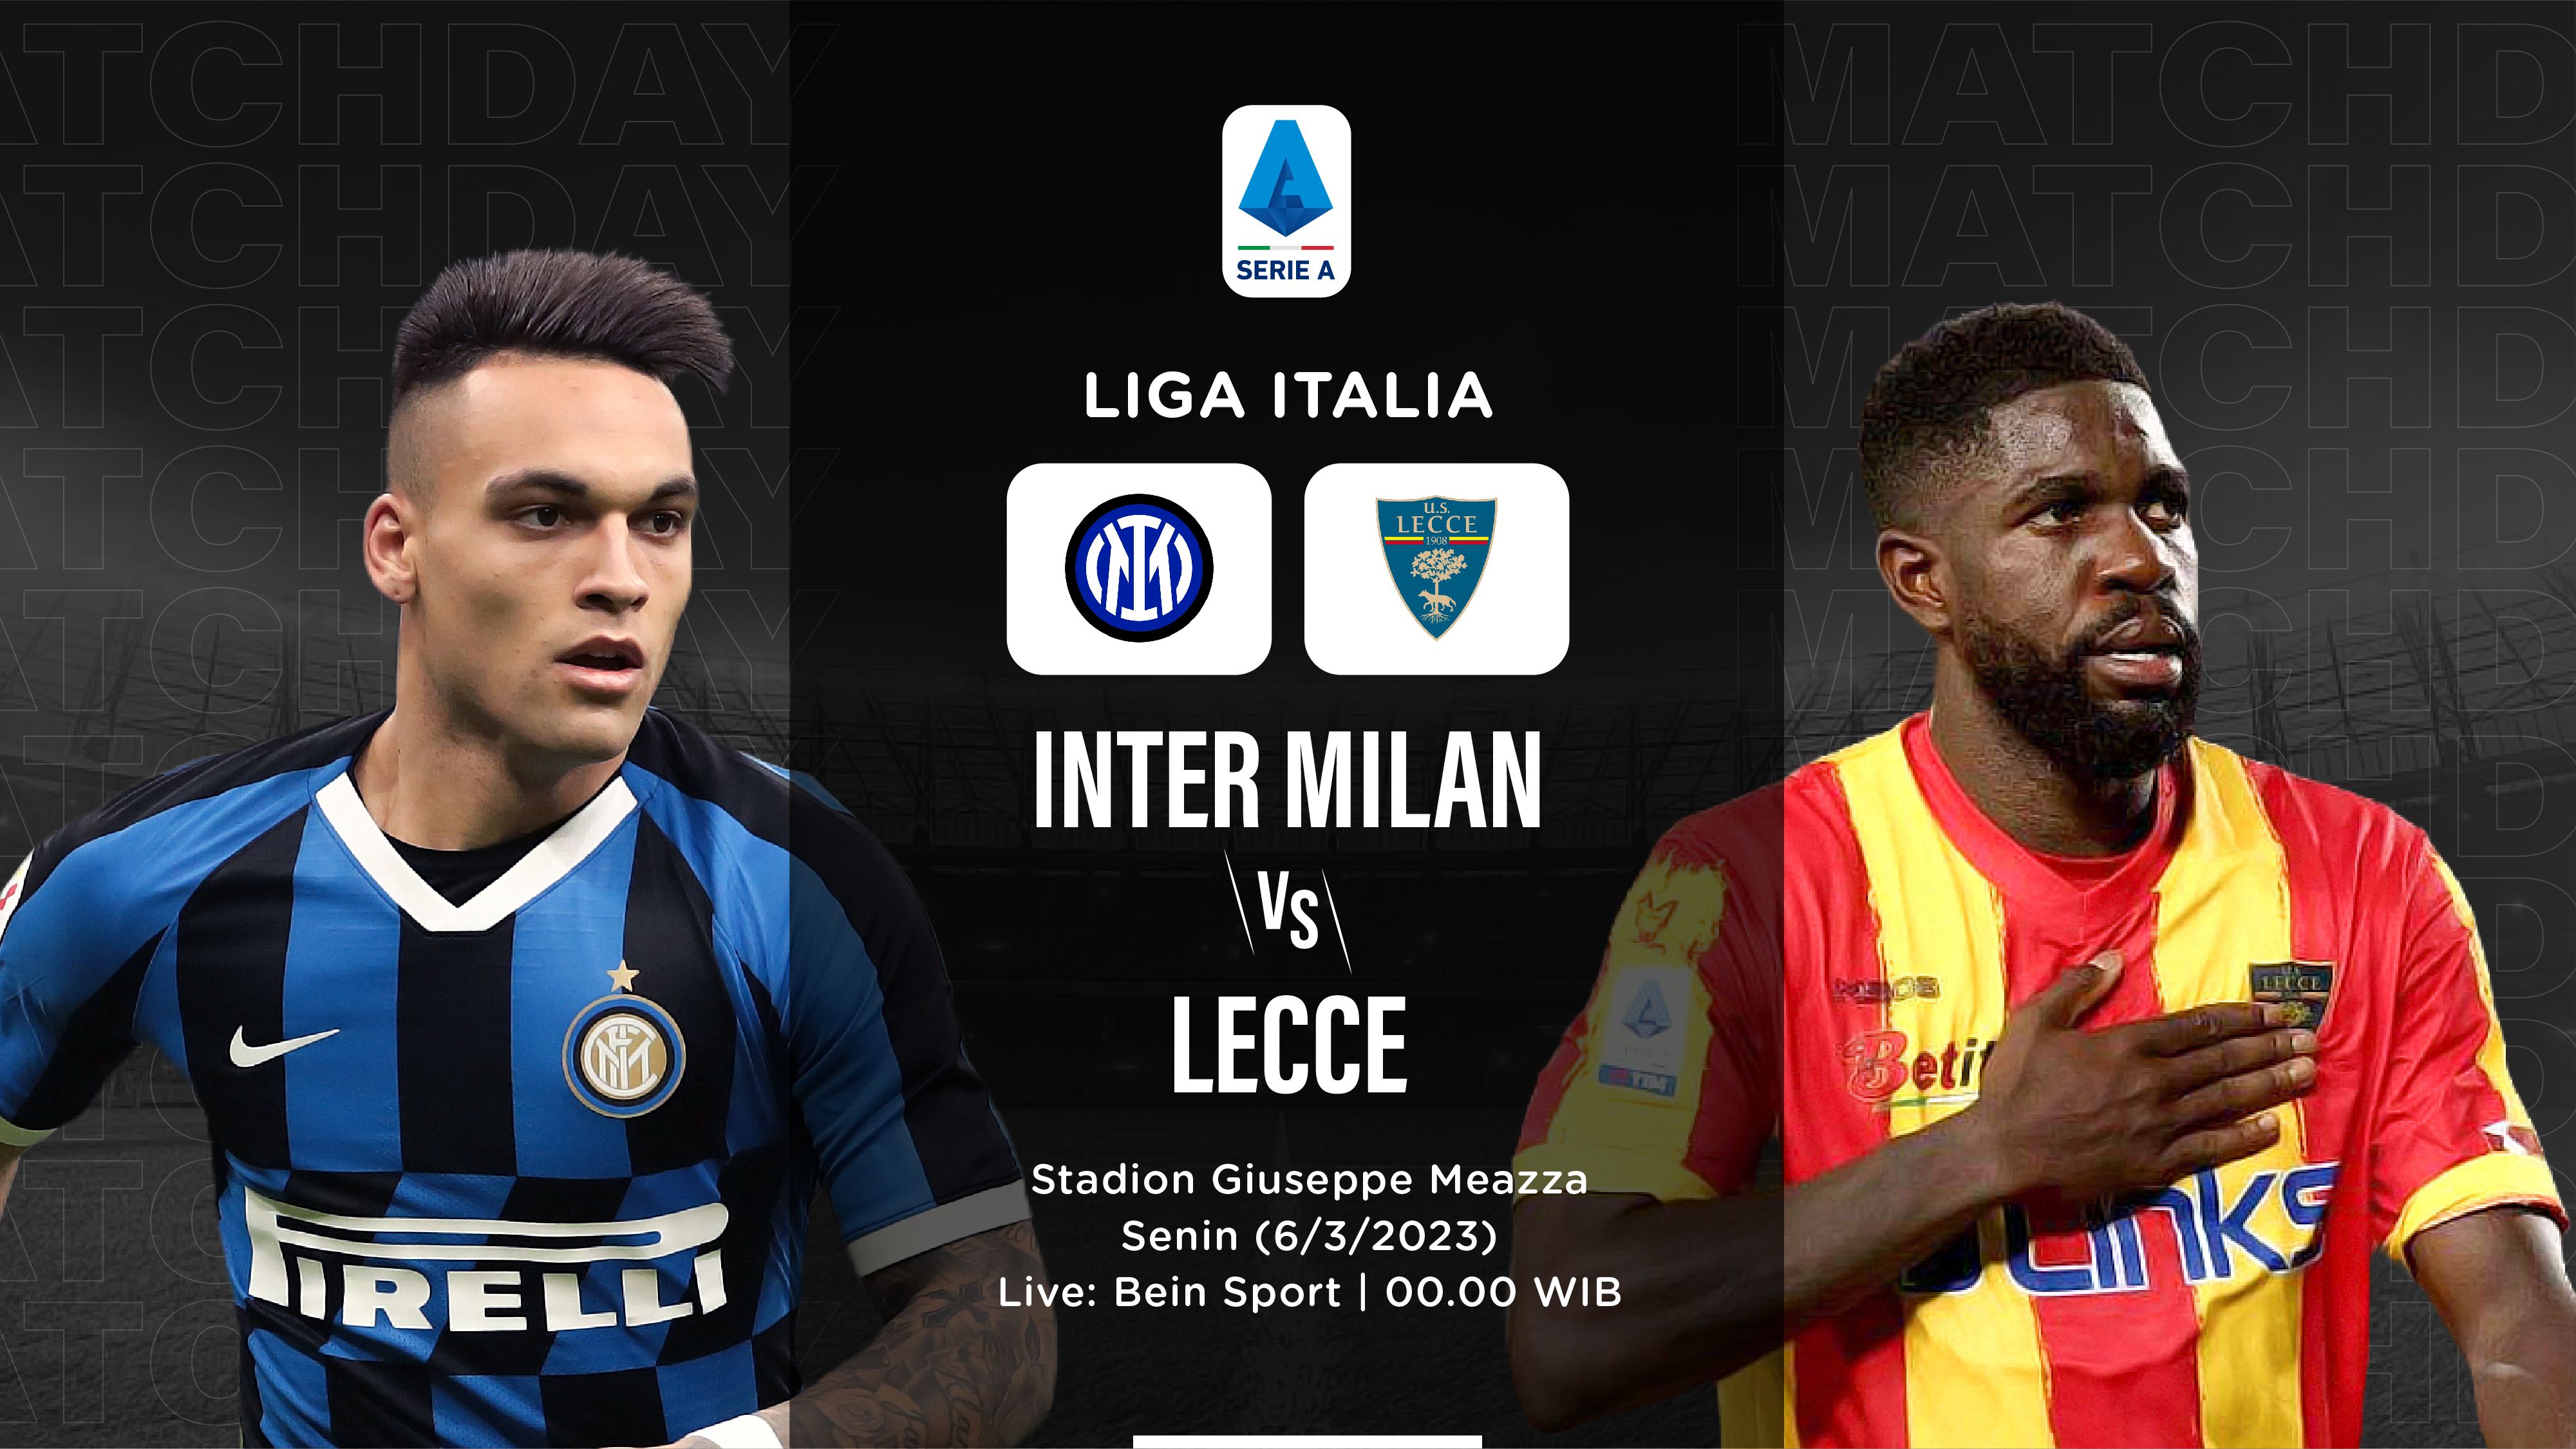 Cover pertandingan Inter Milan vs Lecce di Liga Italia (Grafis: Hendy/Skor.id)